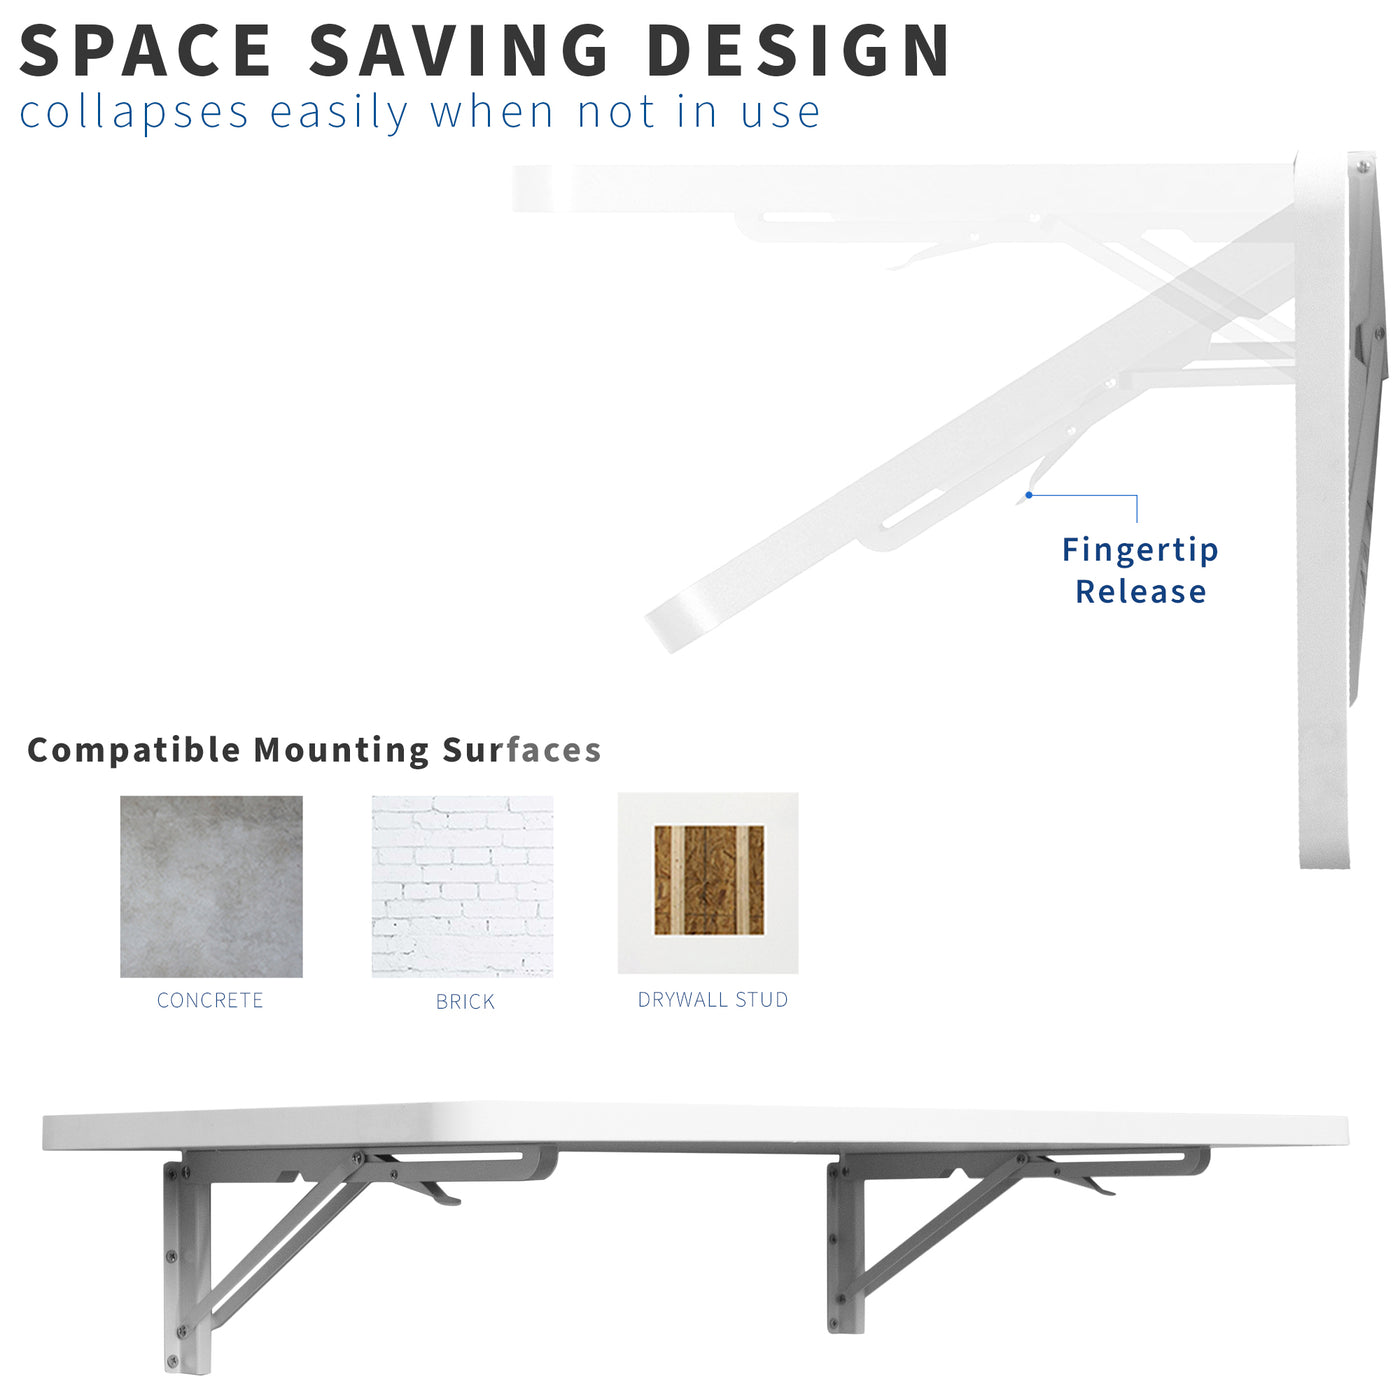 Space saving design of wall mount shelf.